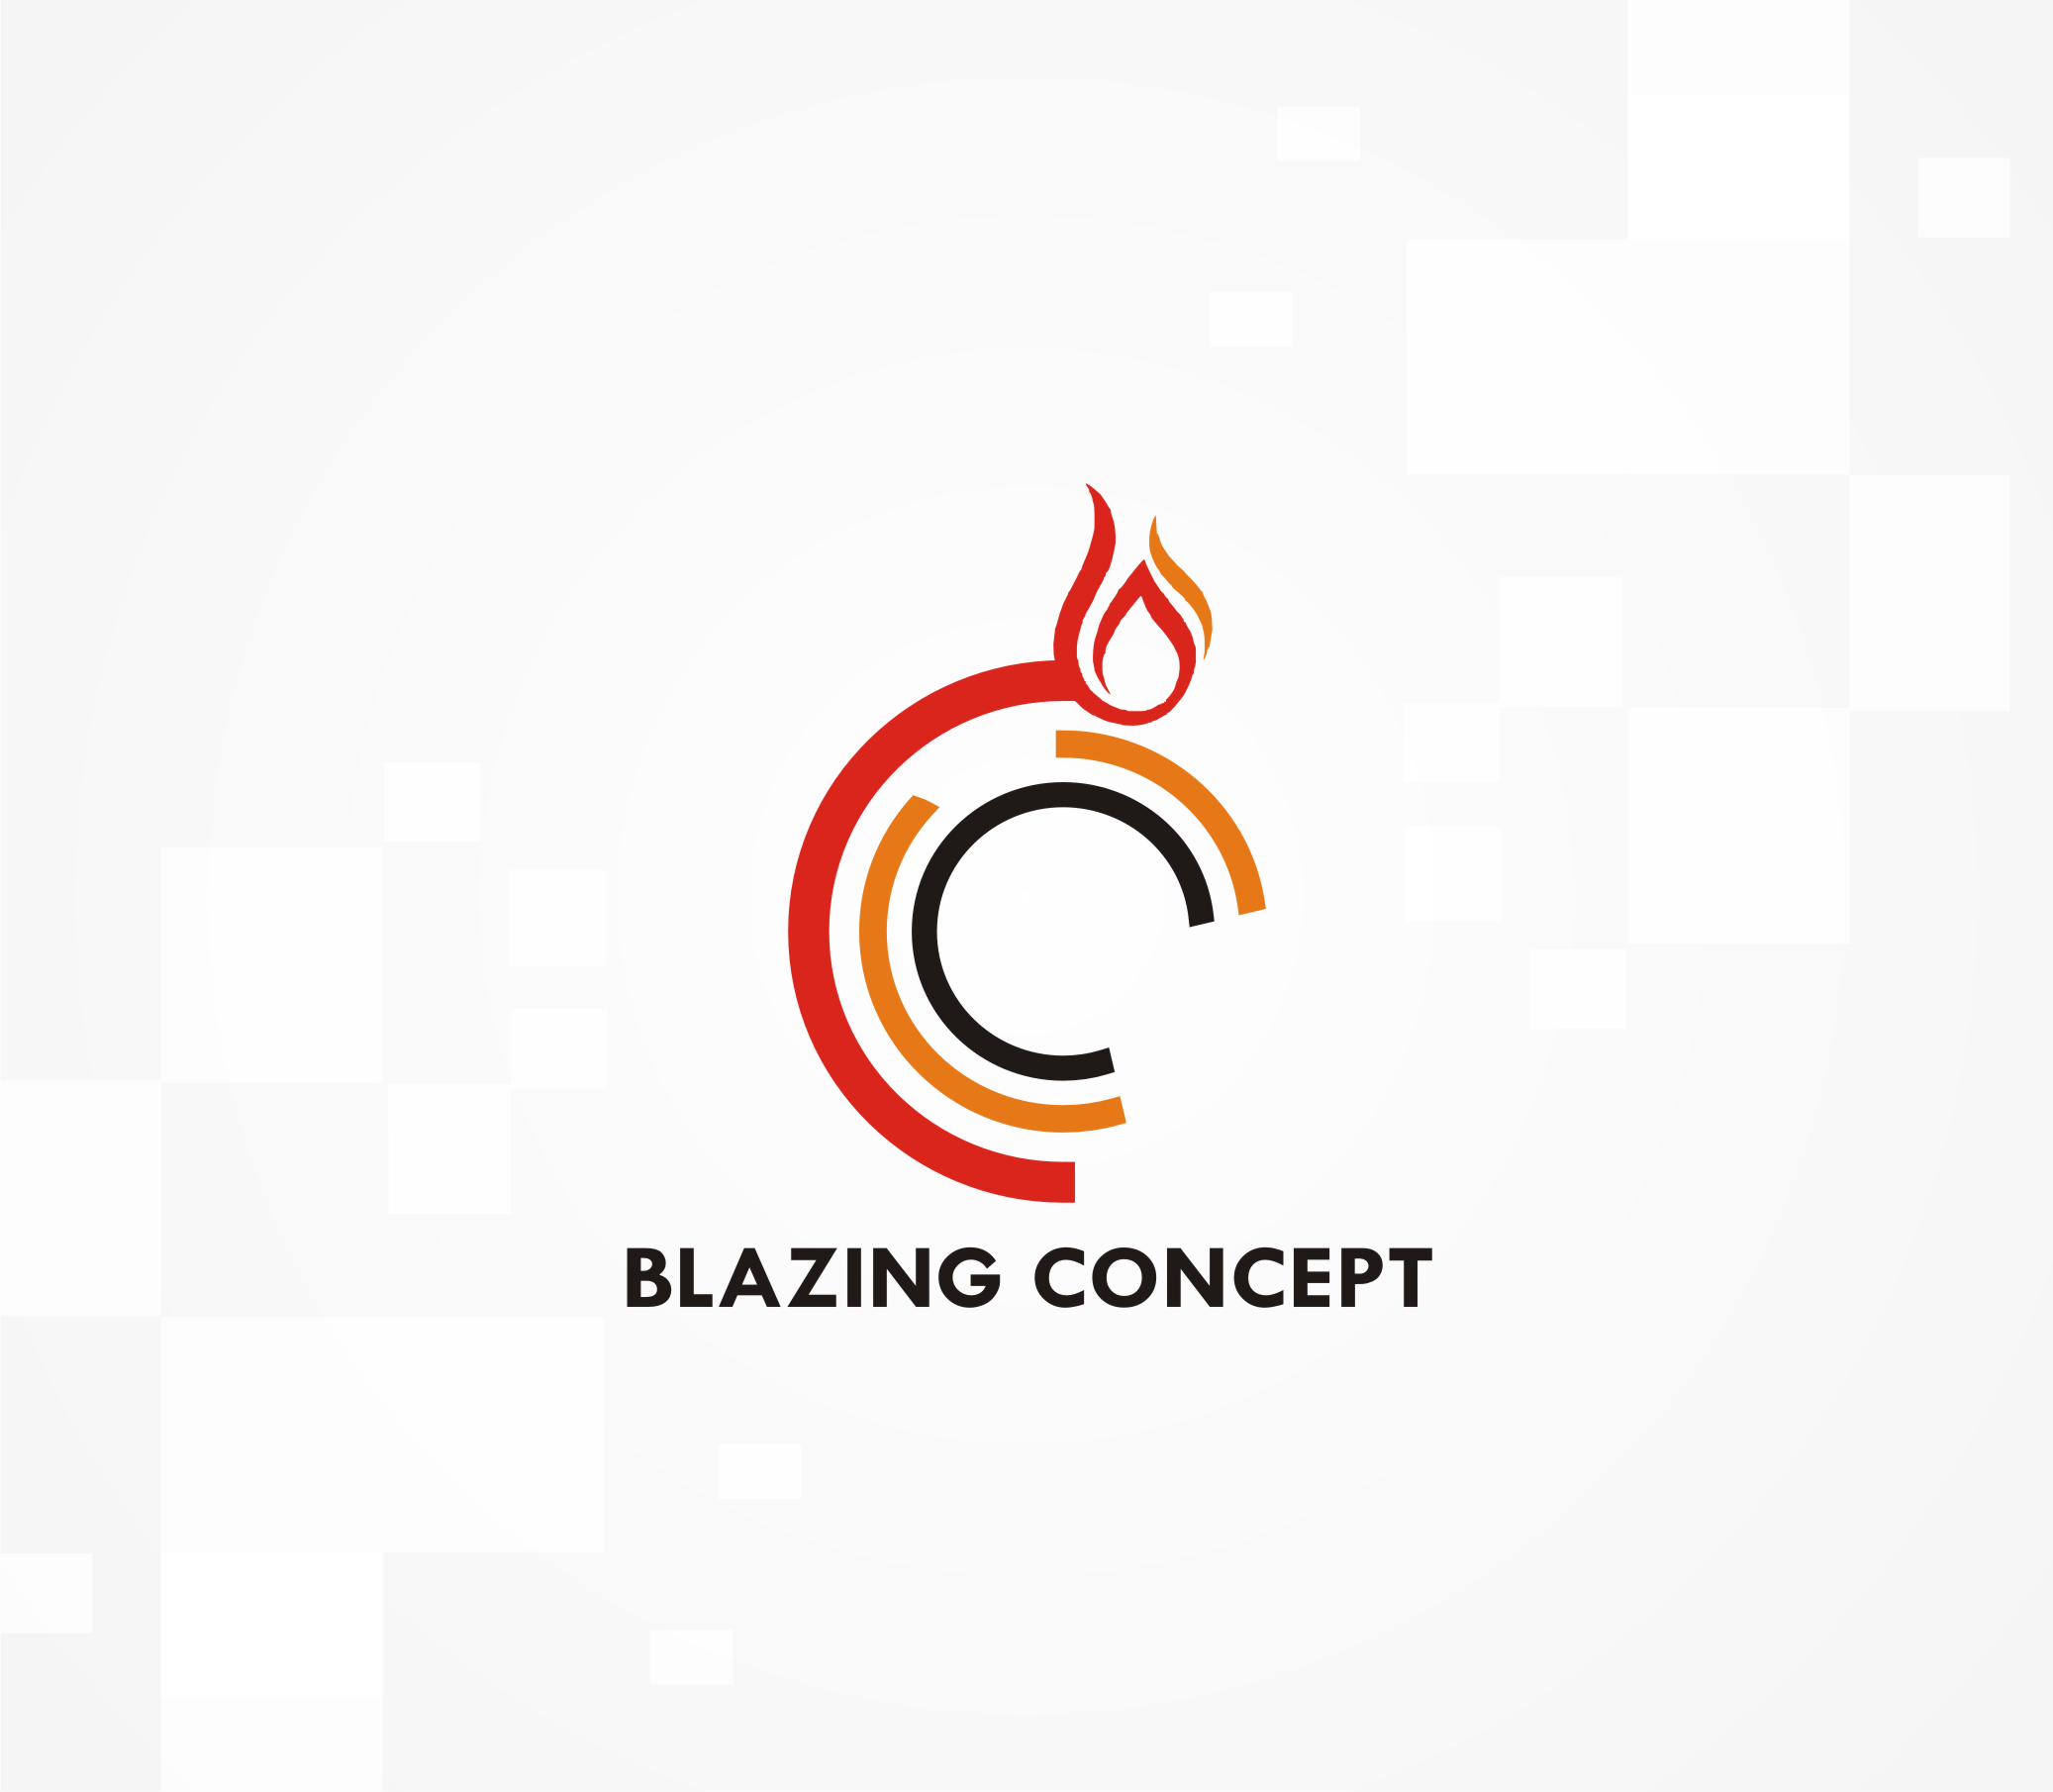 Blazing concept provider